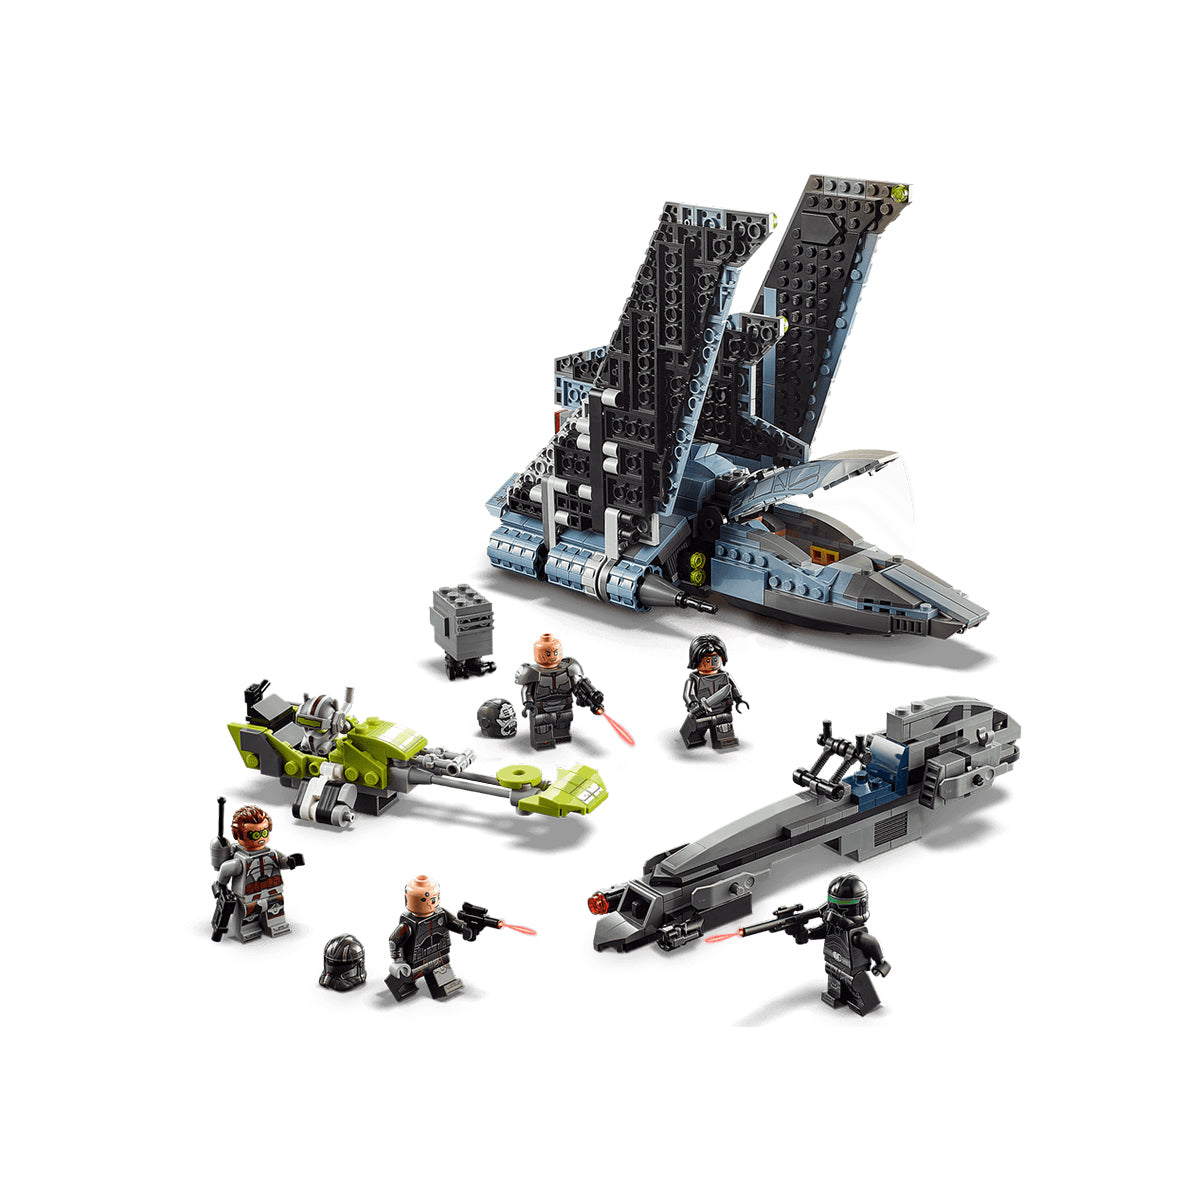 LEGO Star Wars - The Bad Batch Attack Shuttle 75314